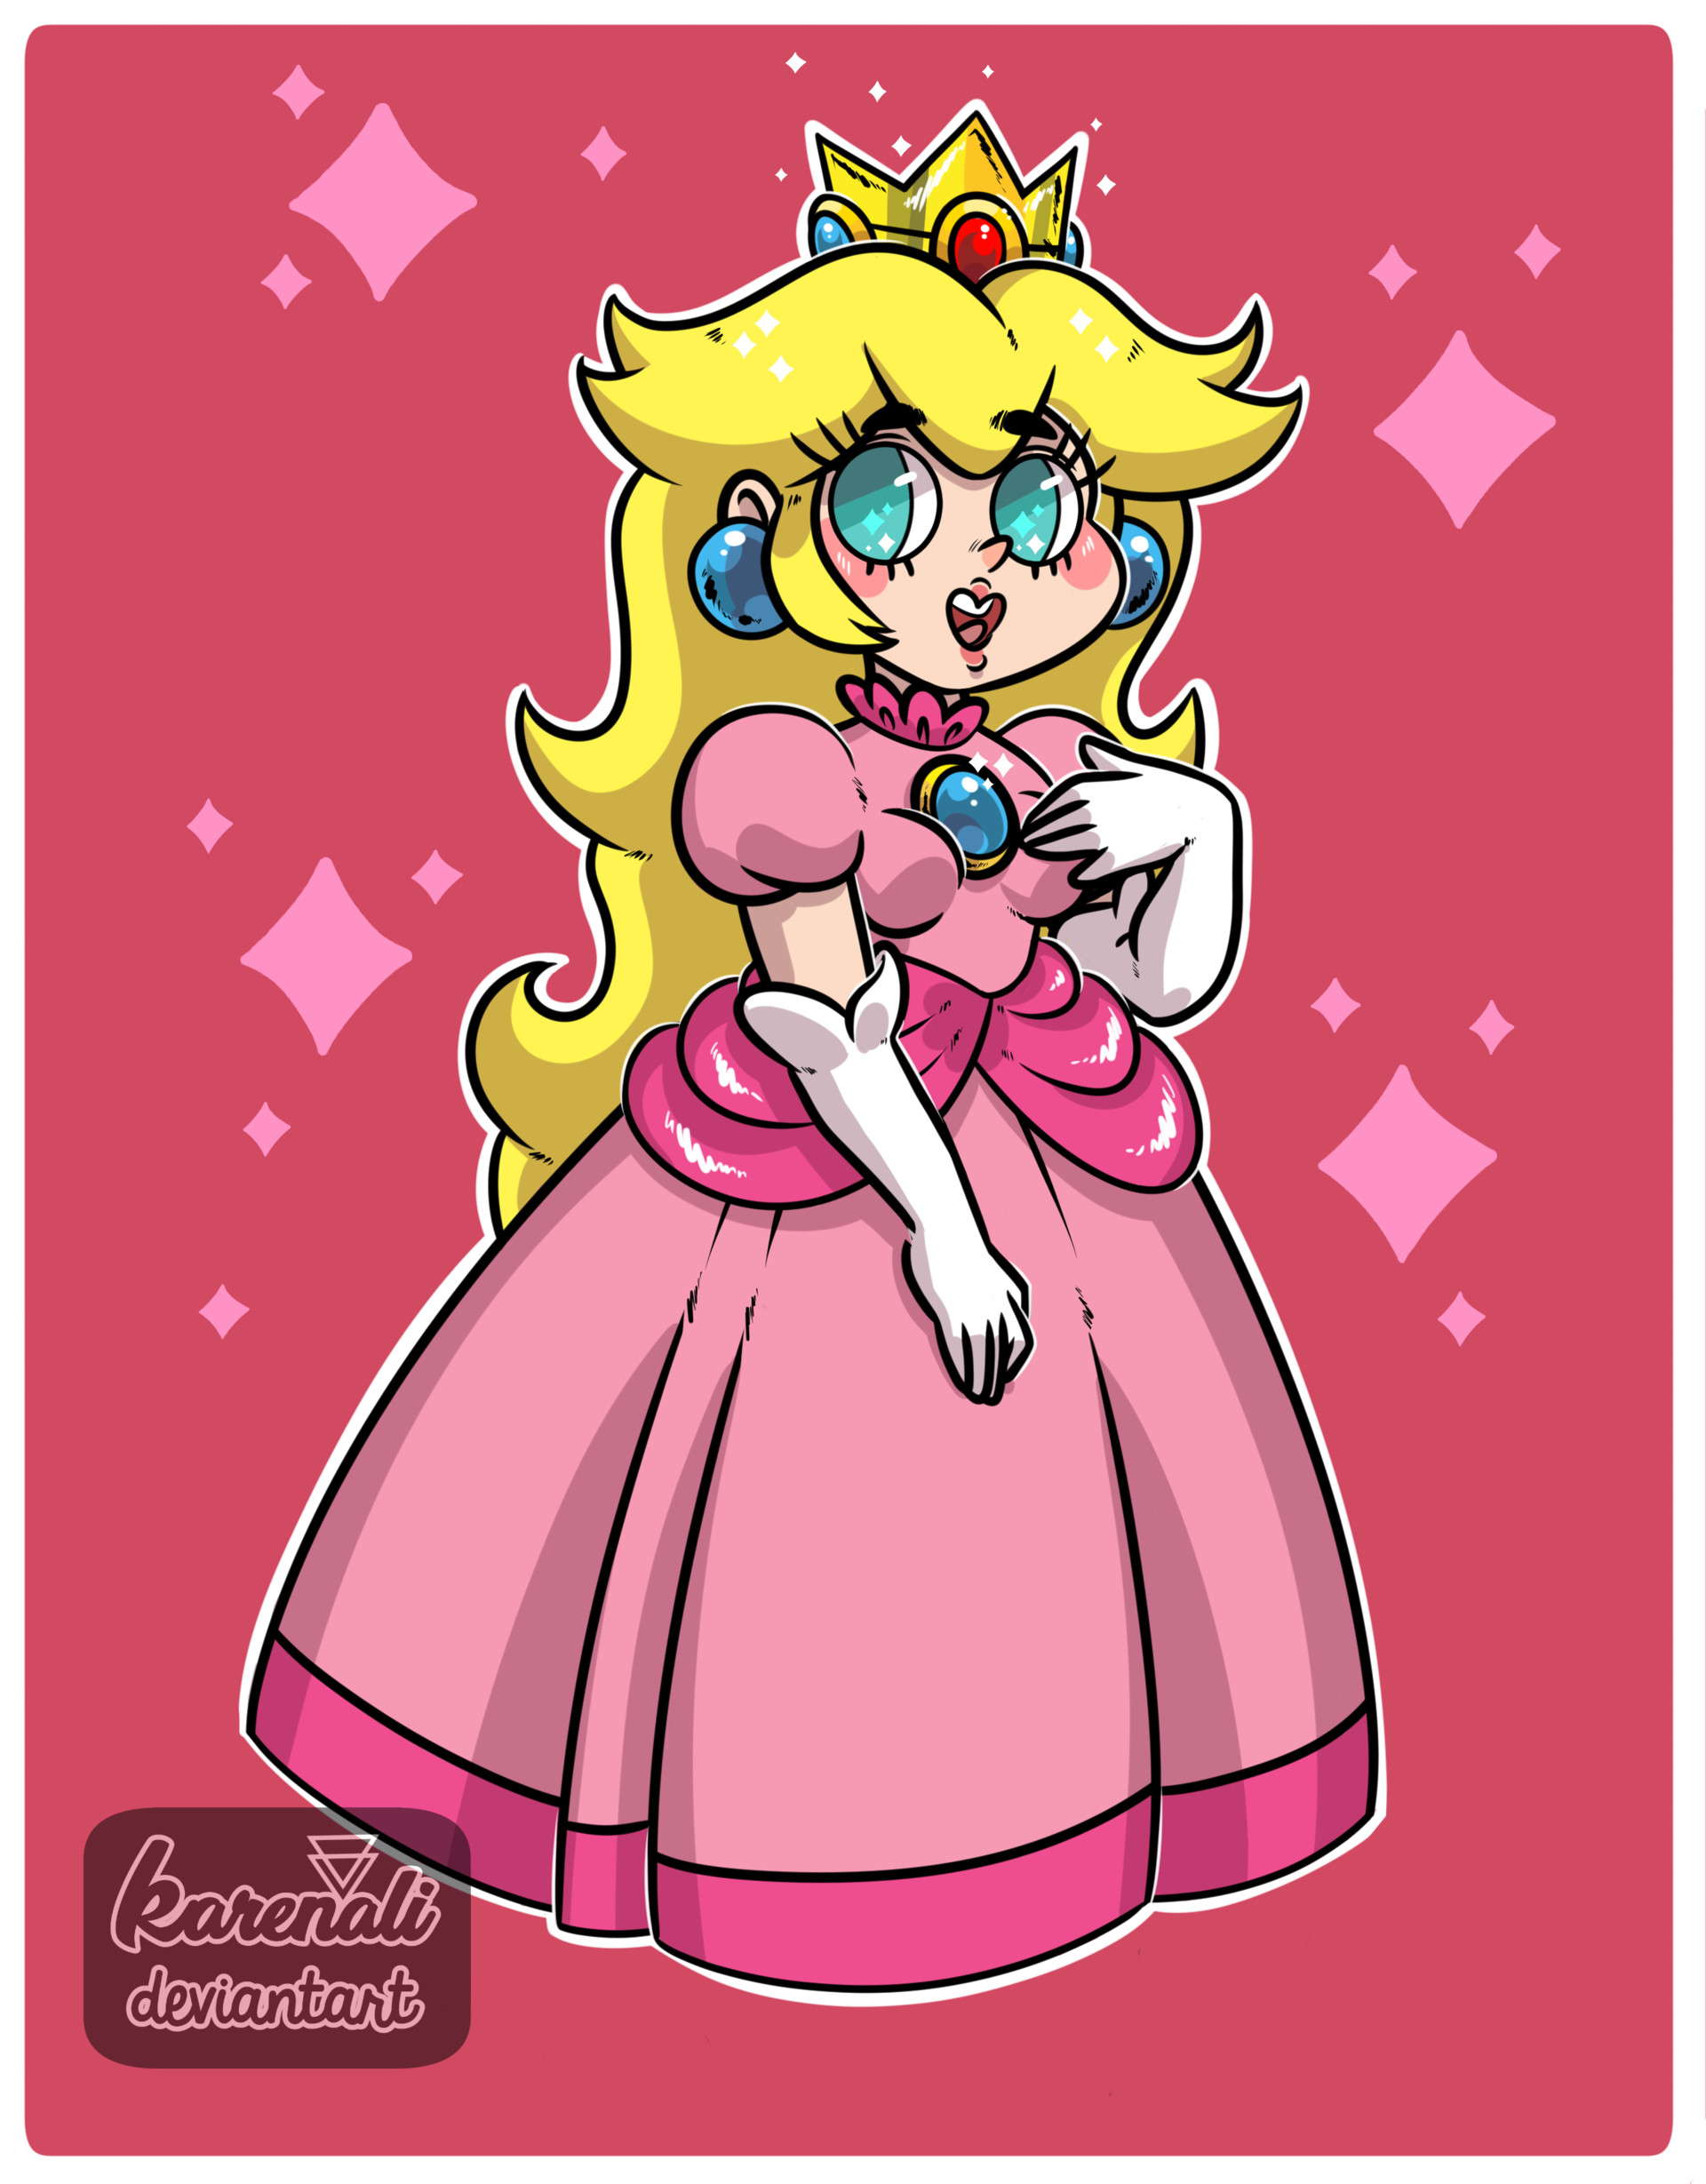 ArtStation - Princess Peach - Cartoon Style